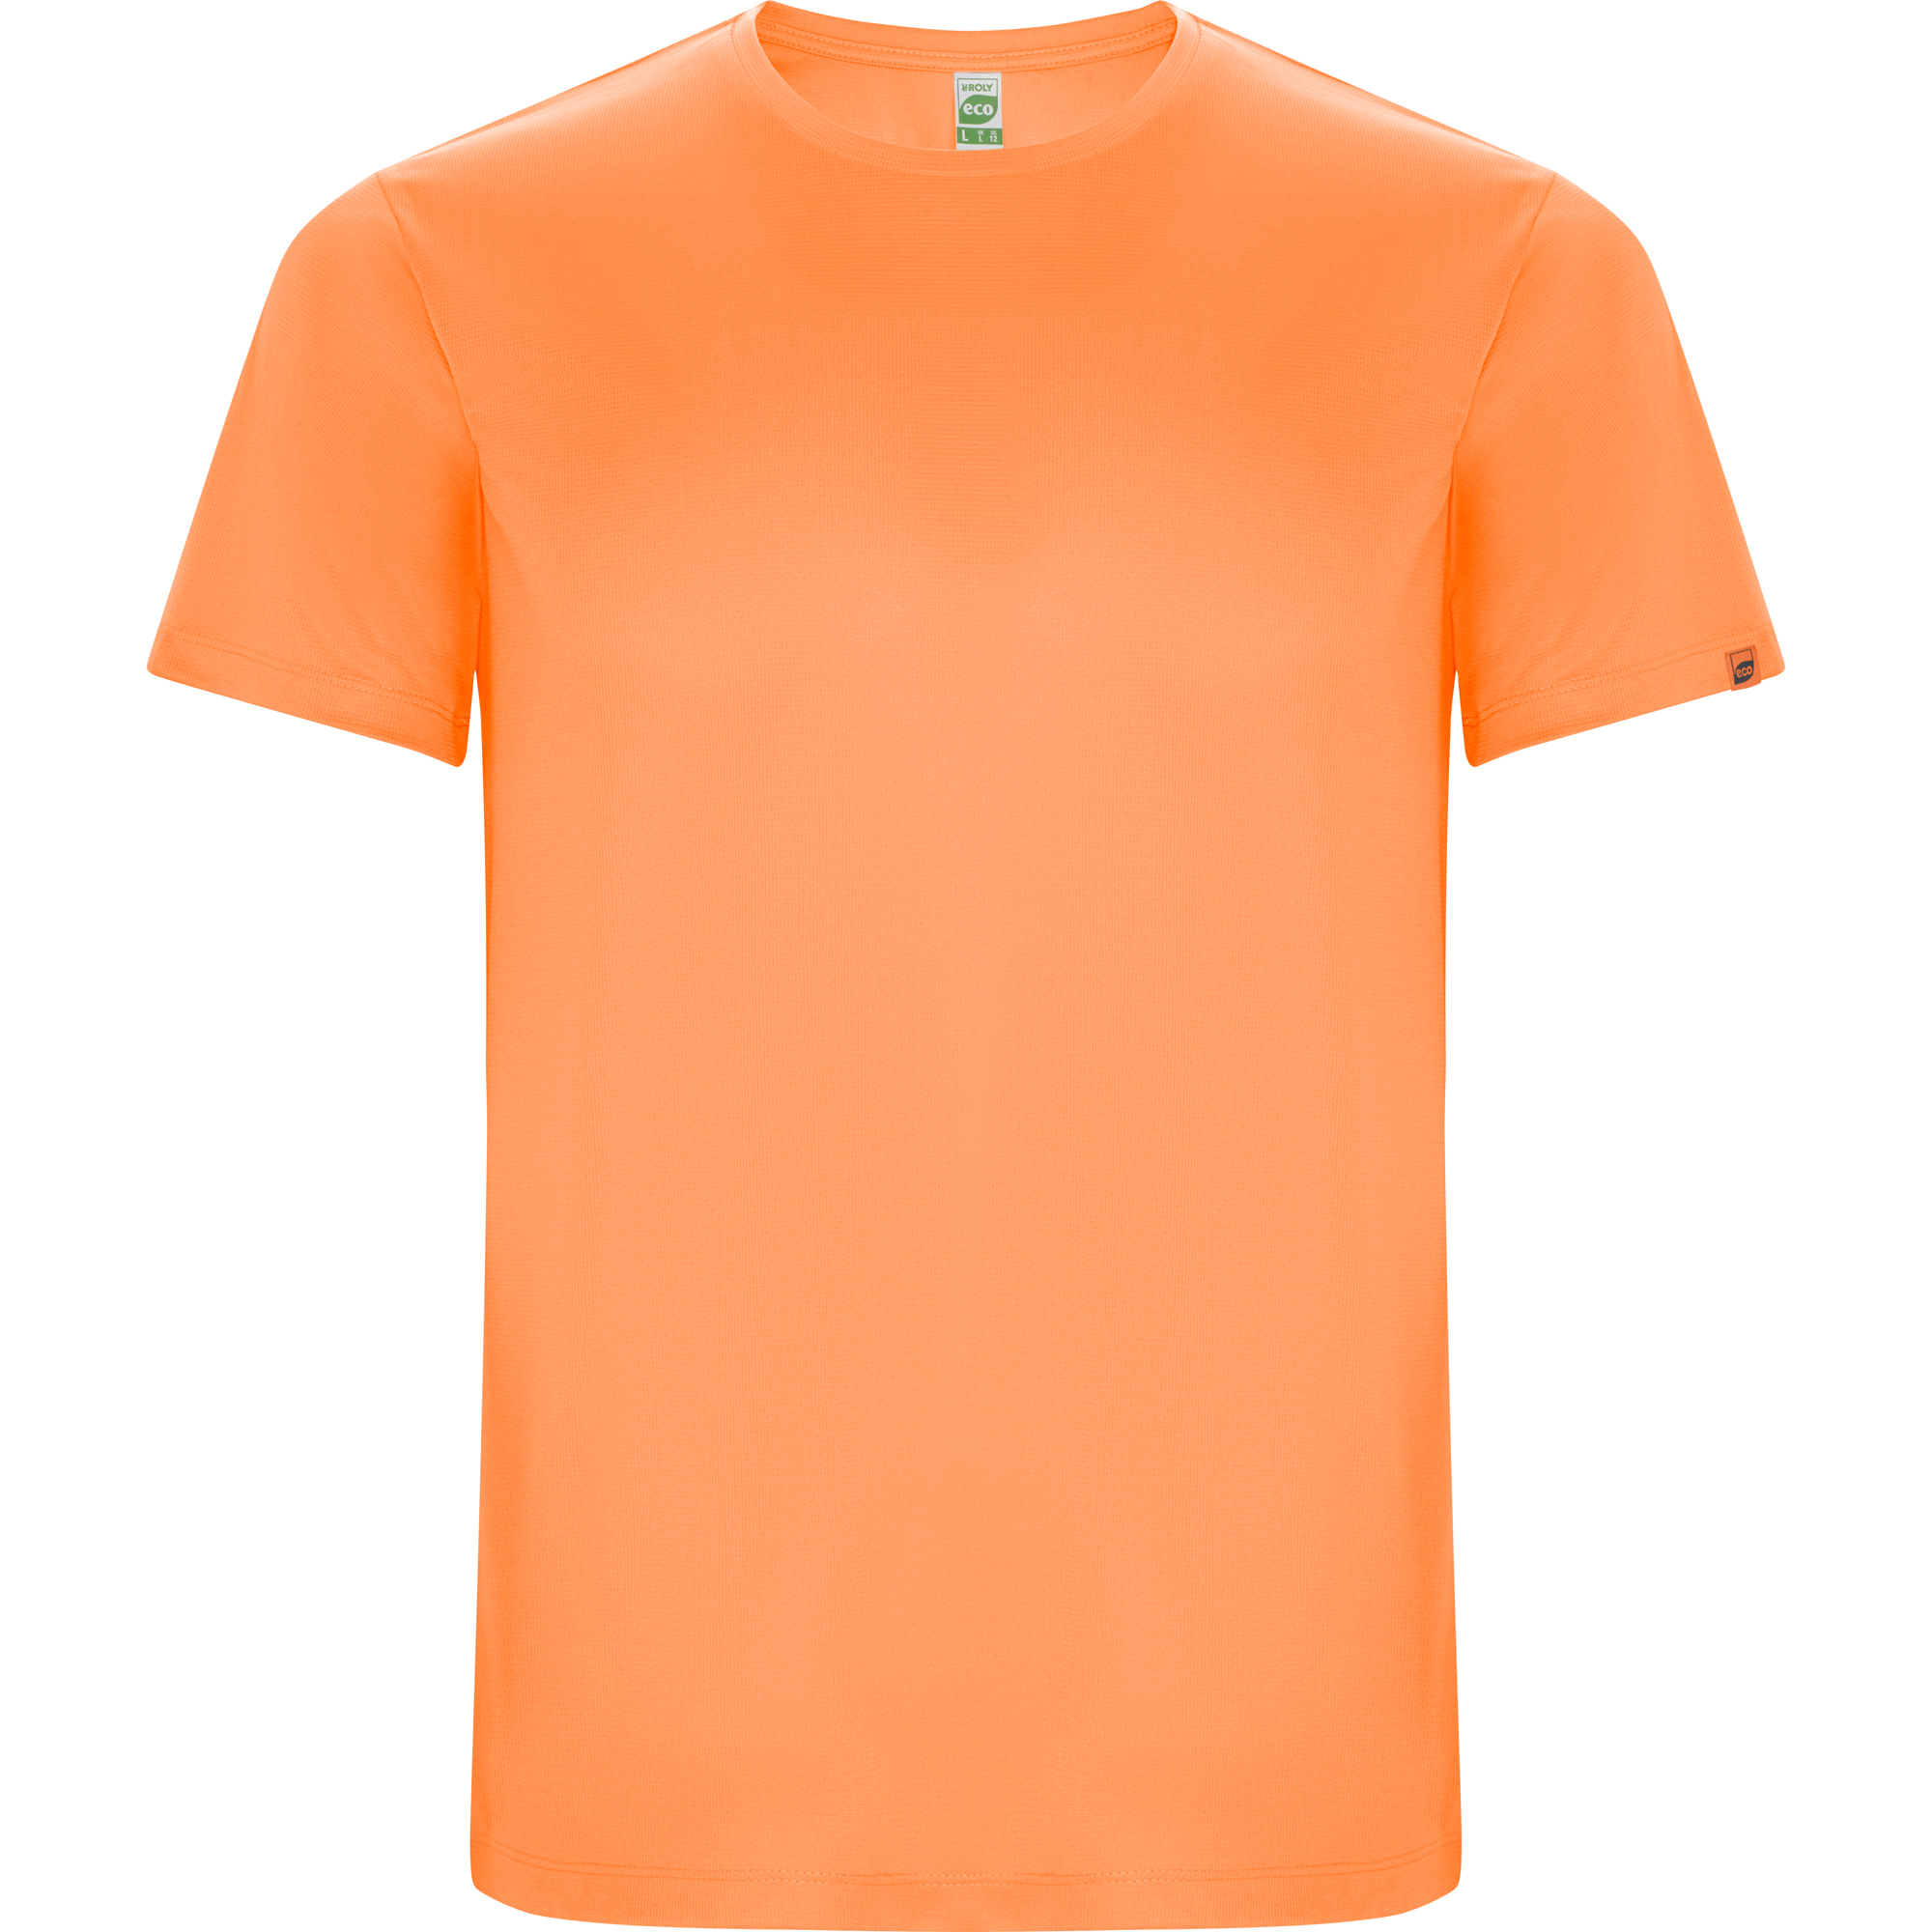 r0427-roly-imola-t-shirt-tecnica-arancione-fluo.jpg